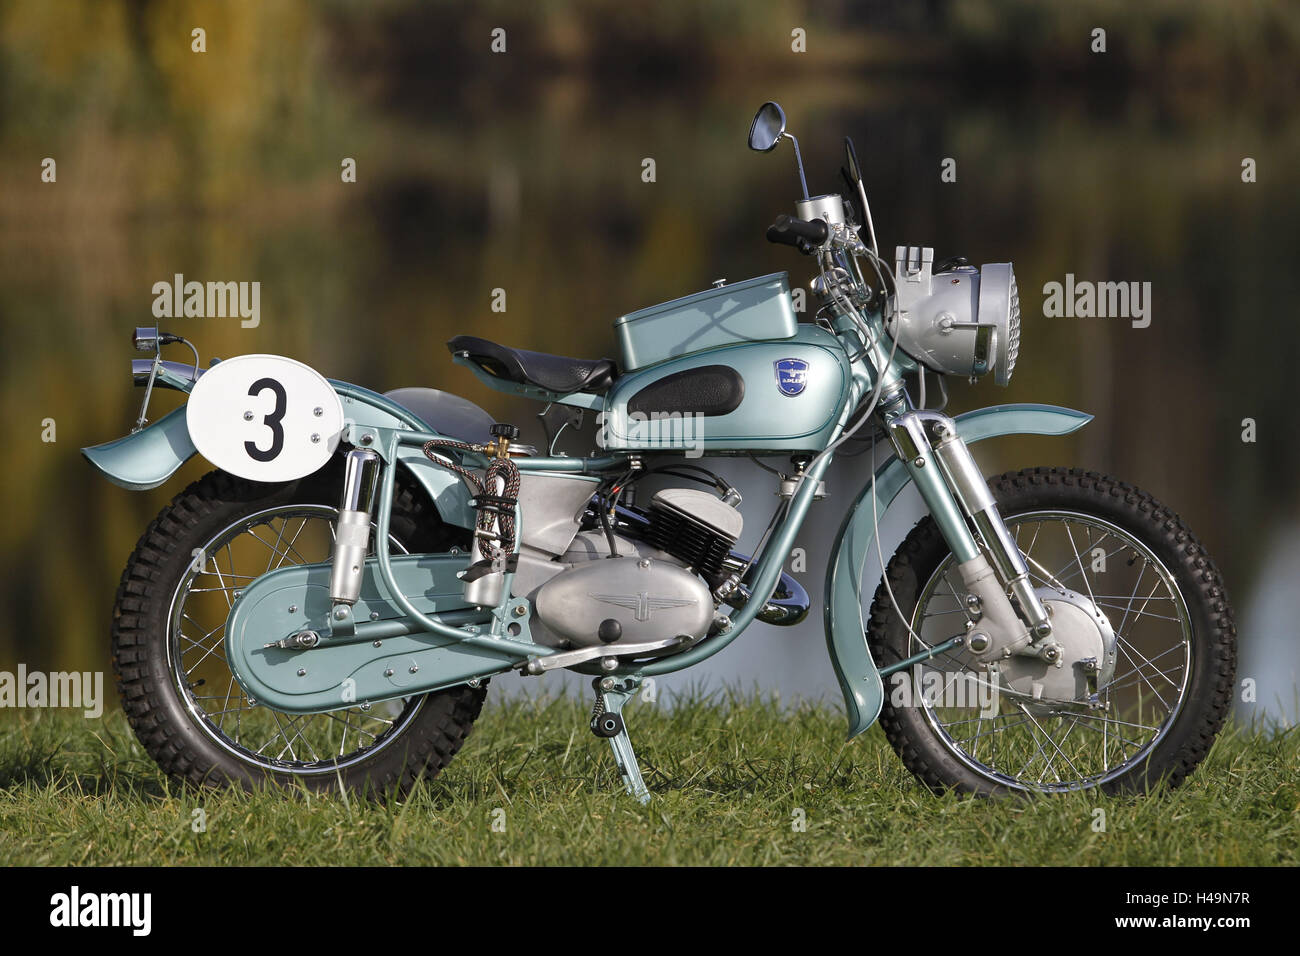 Motorrad, Adler, Oldtimer Motorrad, Baujahr unbekannt, stehend, rechts  Stockfotografie - Alamy